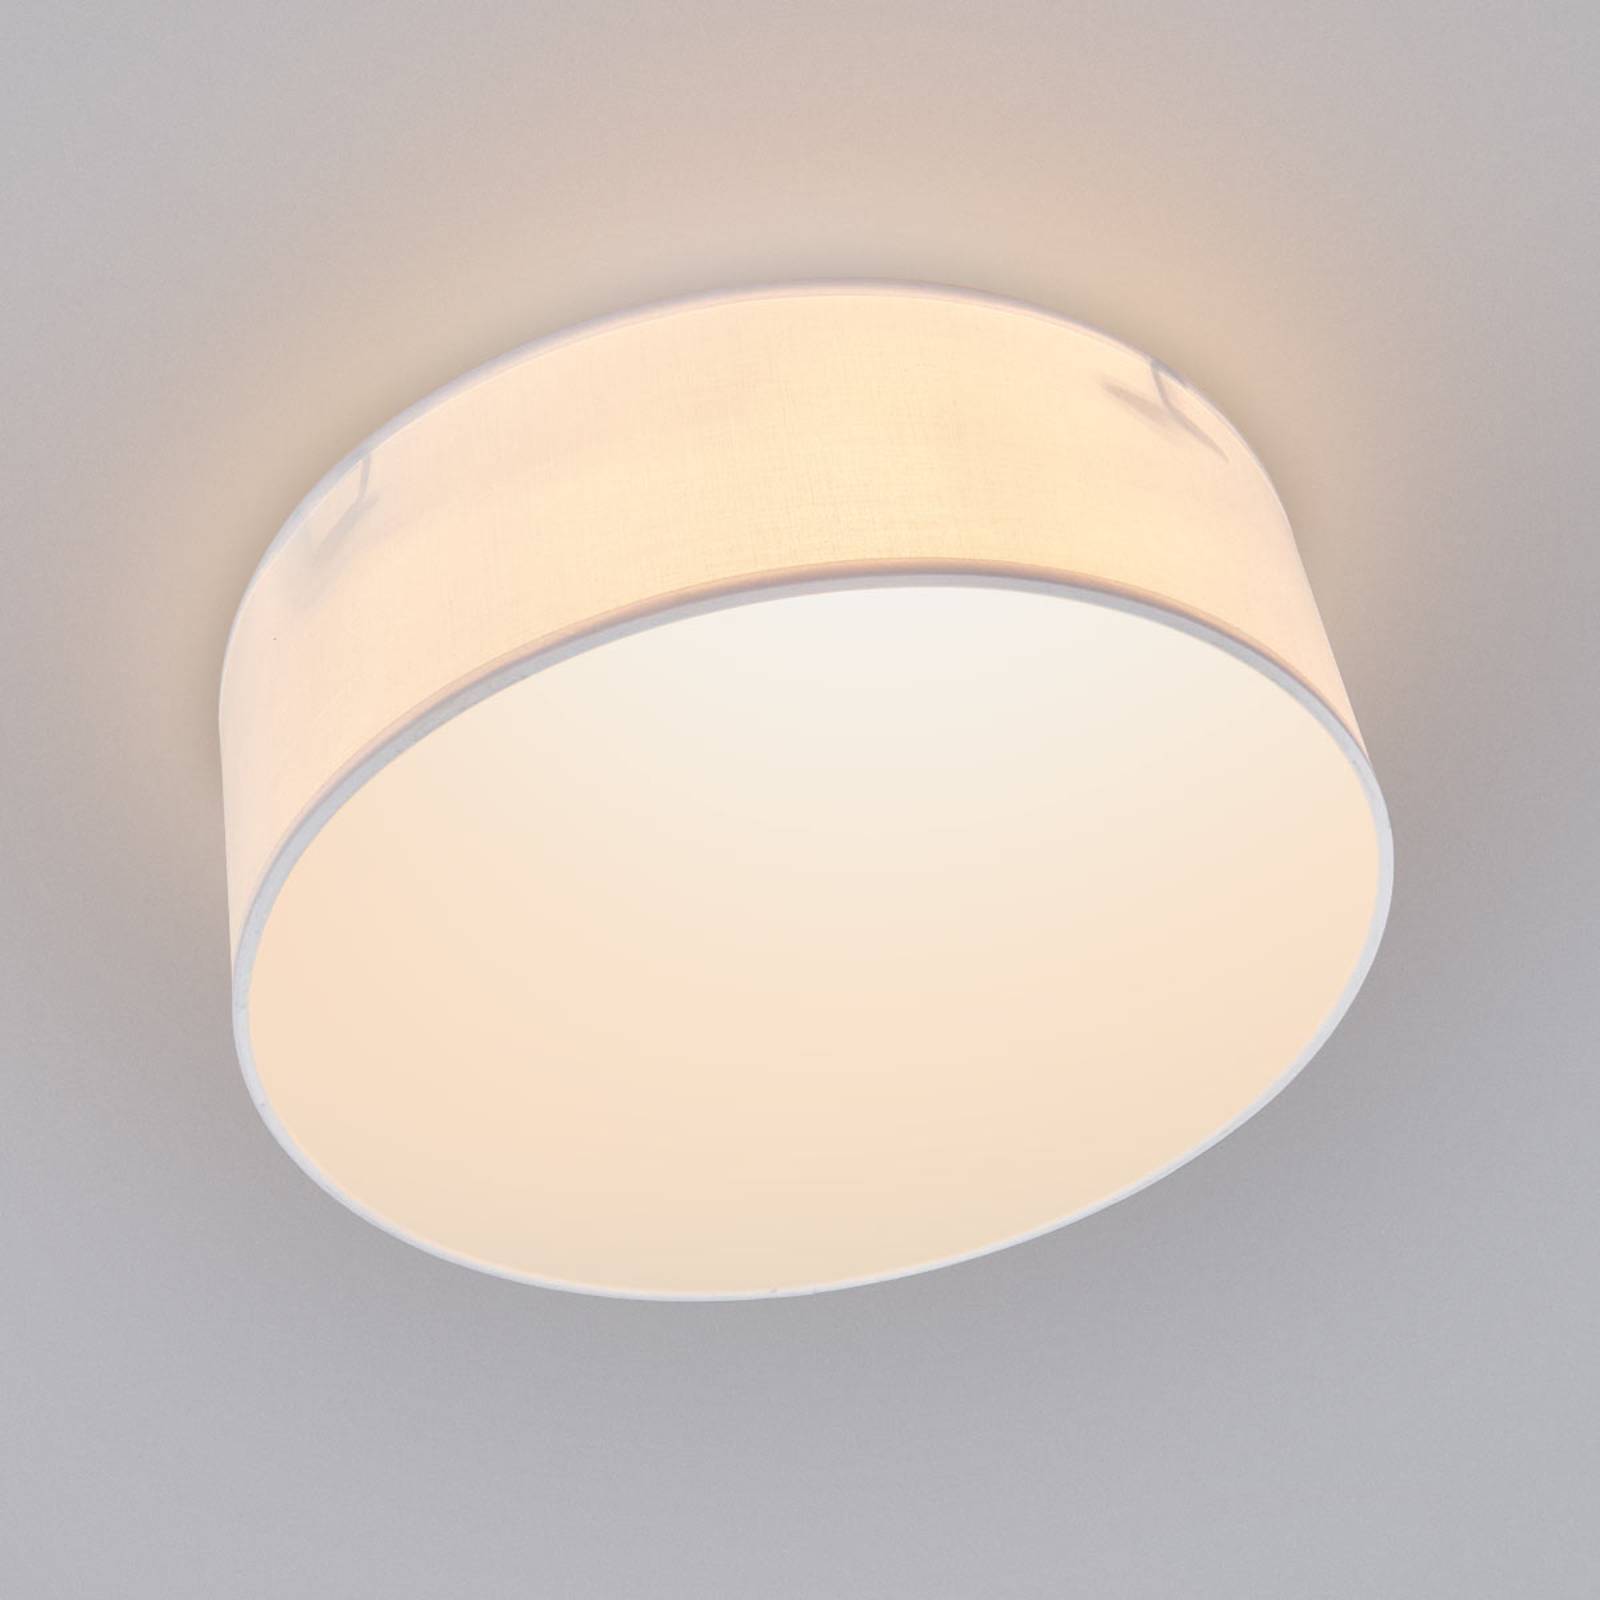 Biała lampa sufitowa CEILING DREAM, 30 cm